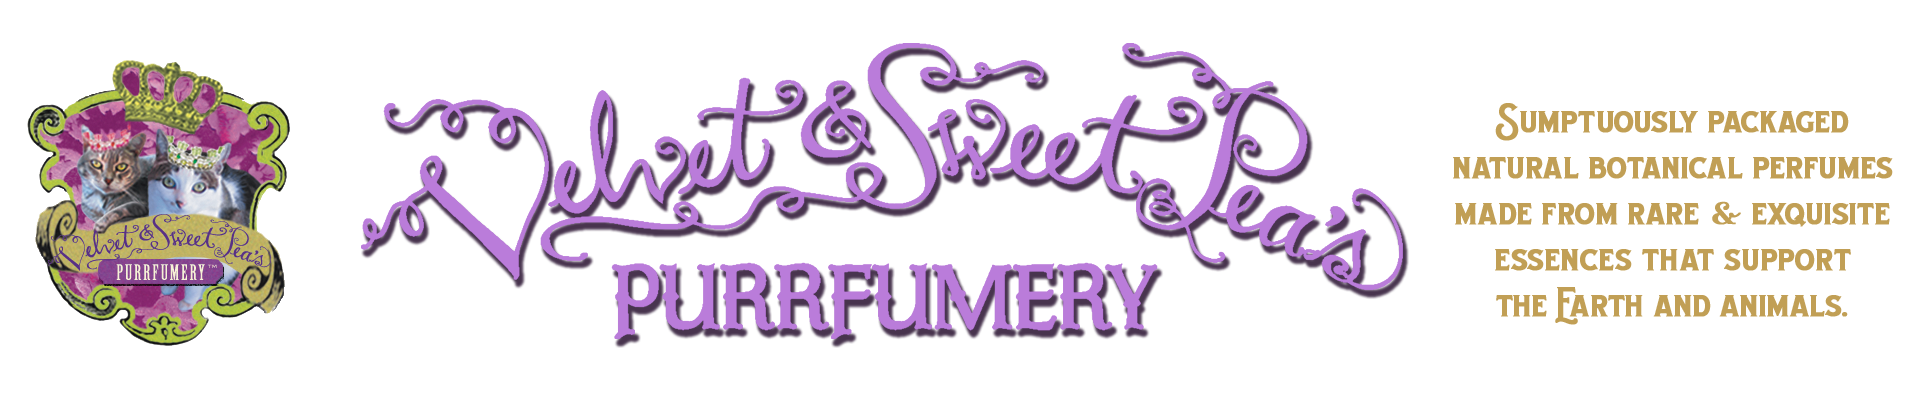 Velvet & Sweet Pea's Purrfumery